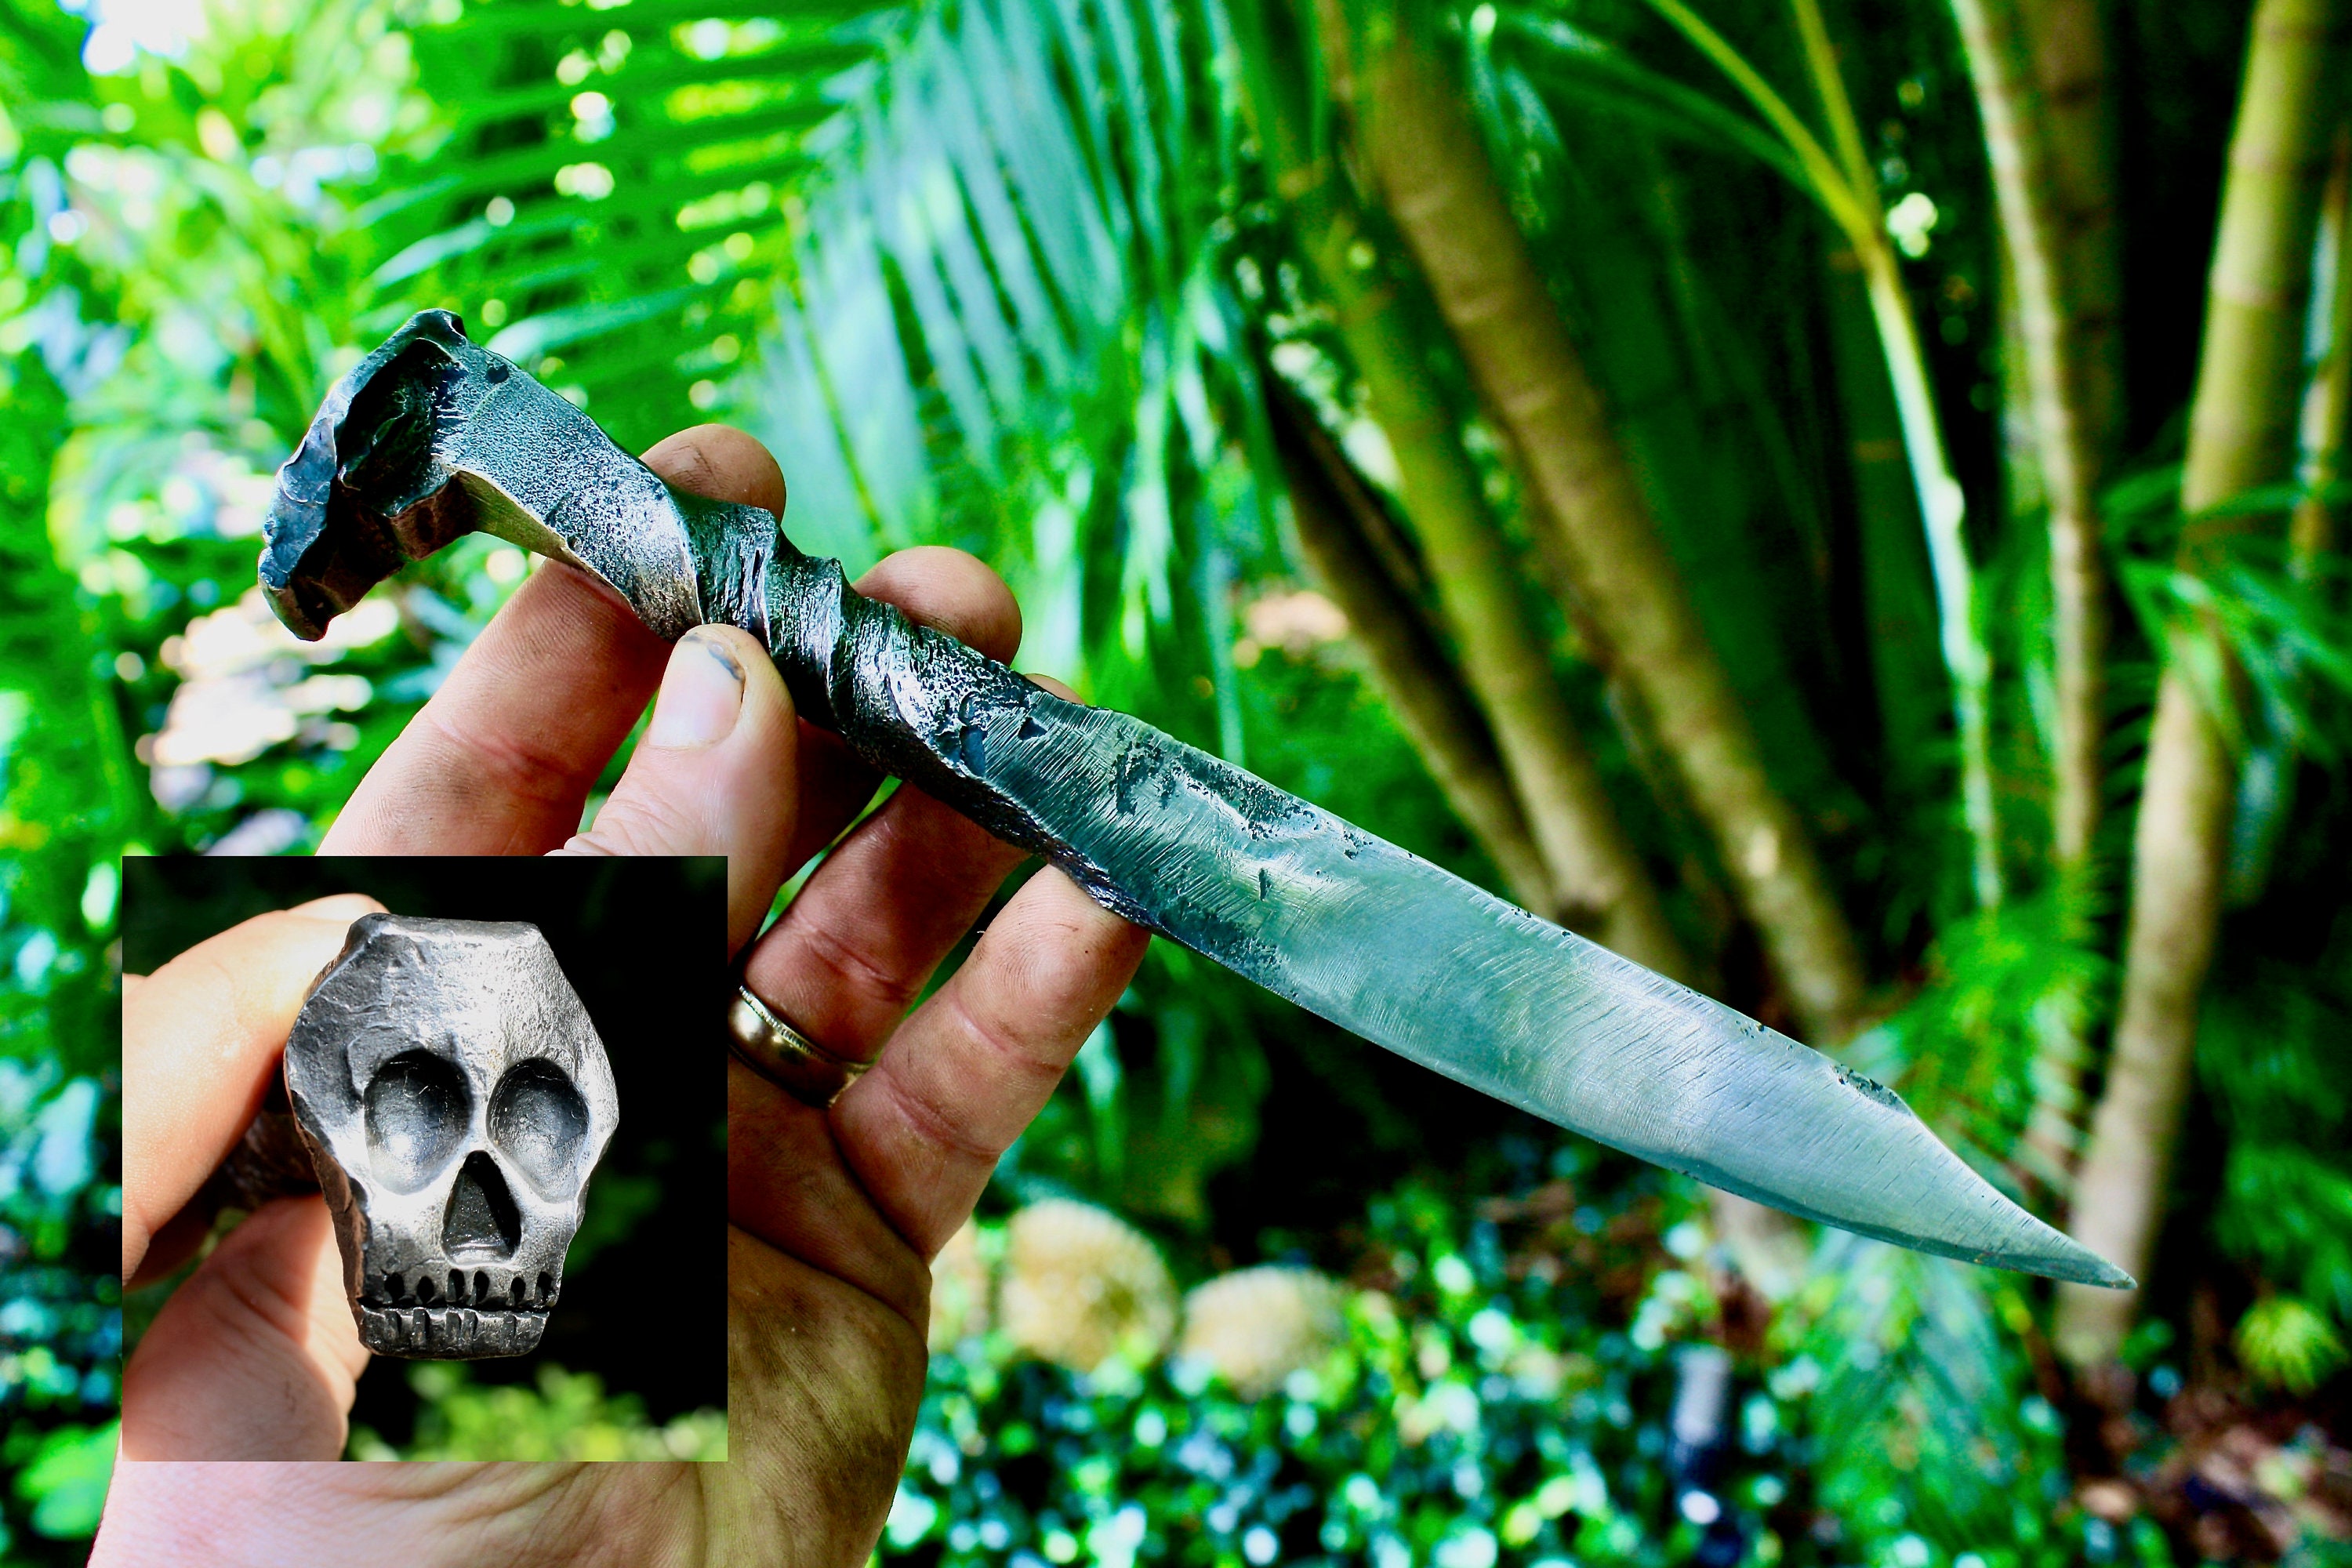 6 Black Ninja Skull Tactical Titanium Throwing Knife 3pc Sheathed Set